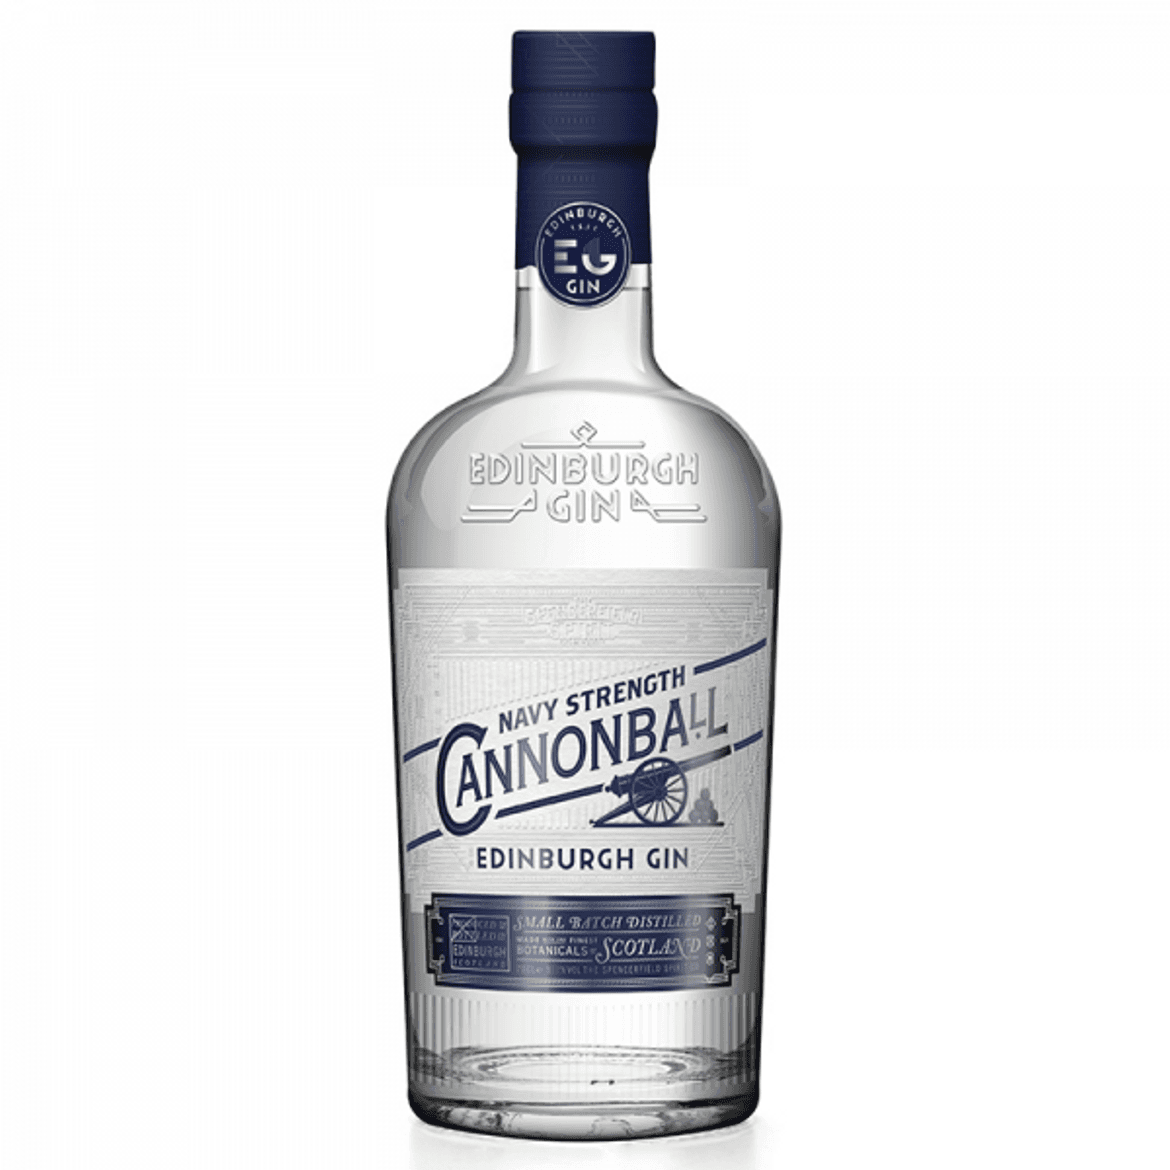 Edinburgh Cannonball Navy Strength gin 57,2%